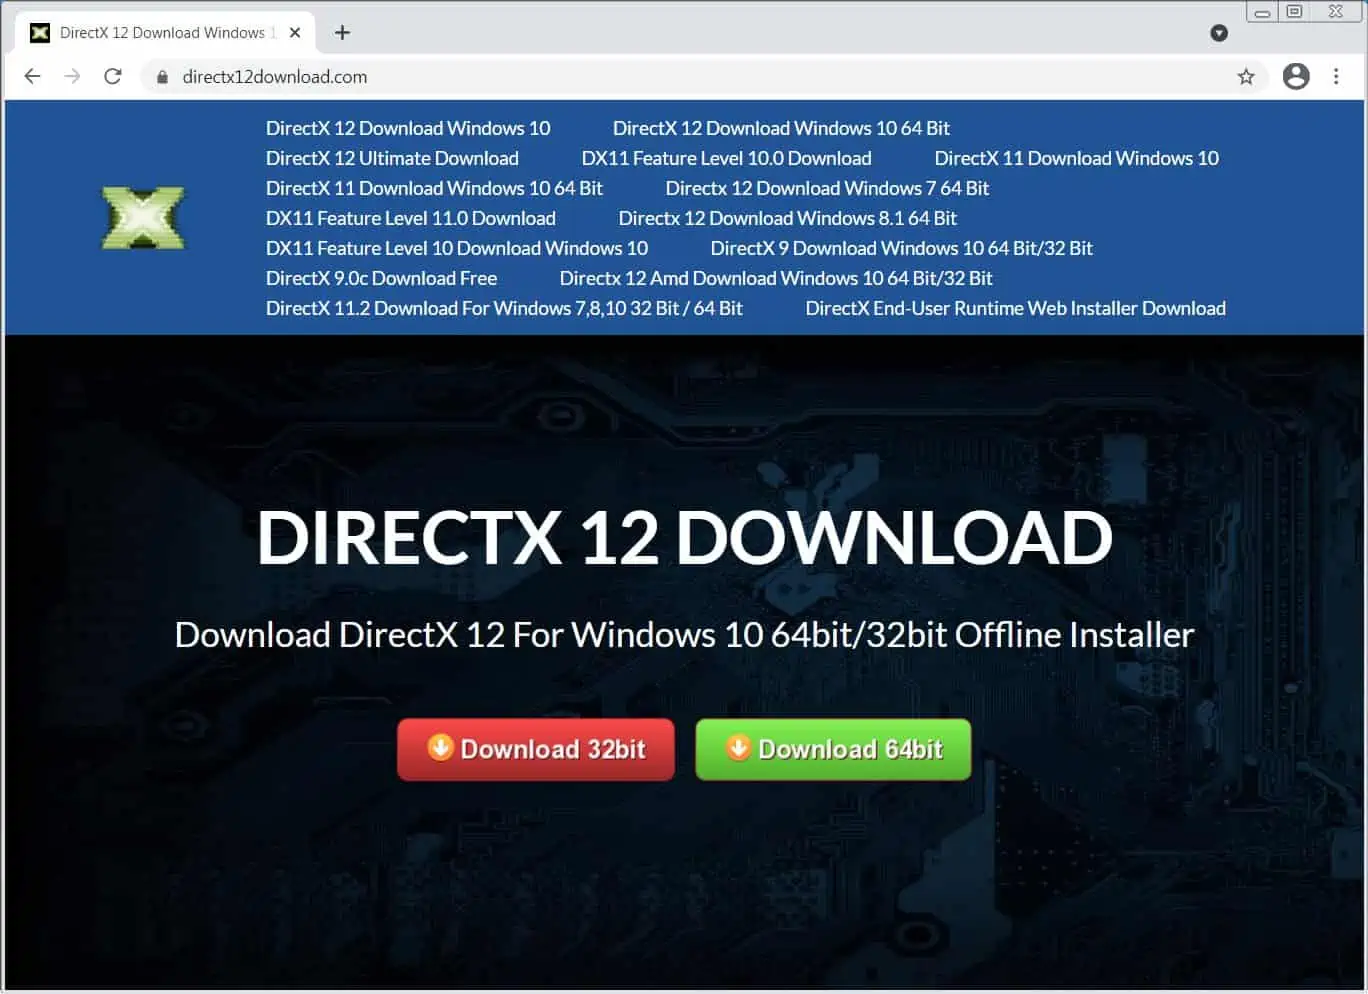 Fake DirectX12 download site installs crypto-stealing malware - MSPoweruser